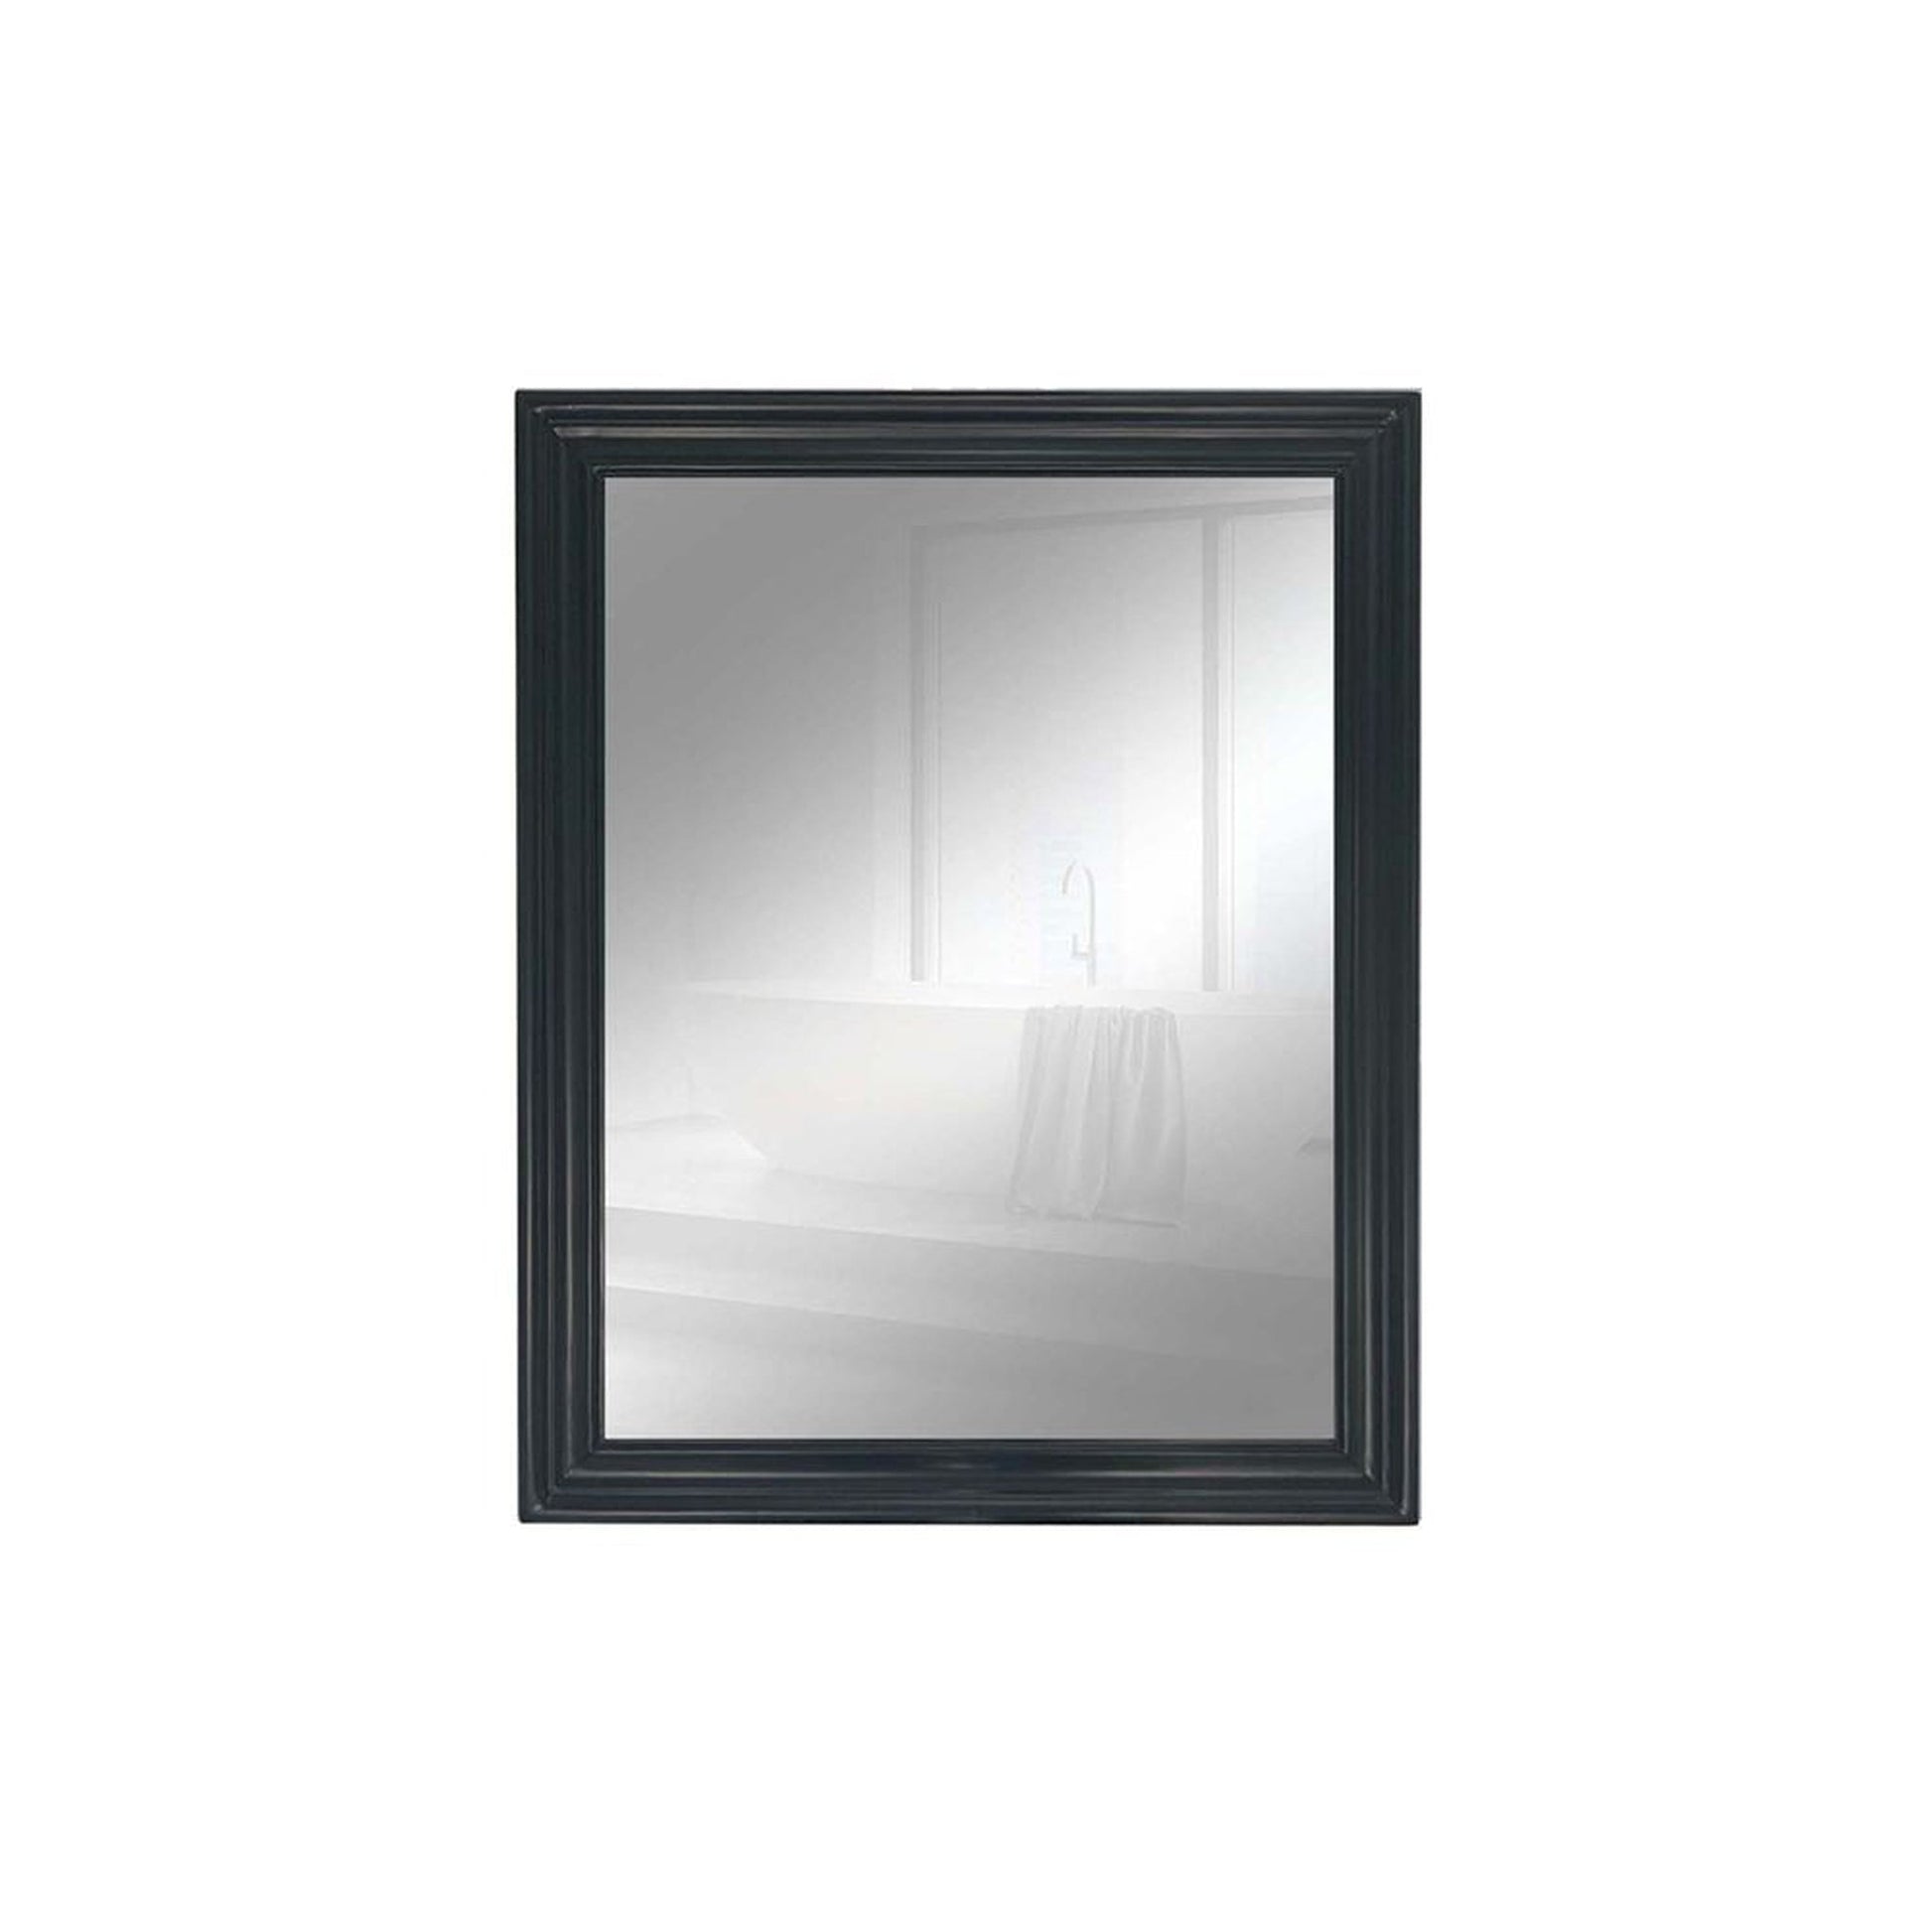 Bellaterra Home 400800-24-M-DG 24" x 30" Dark Gray Rectangle Wall-Mounted Wood Framed Mirror